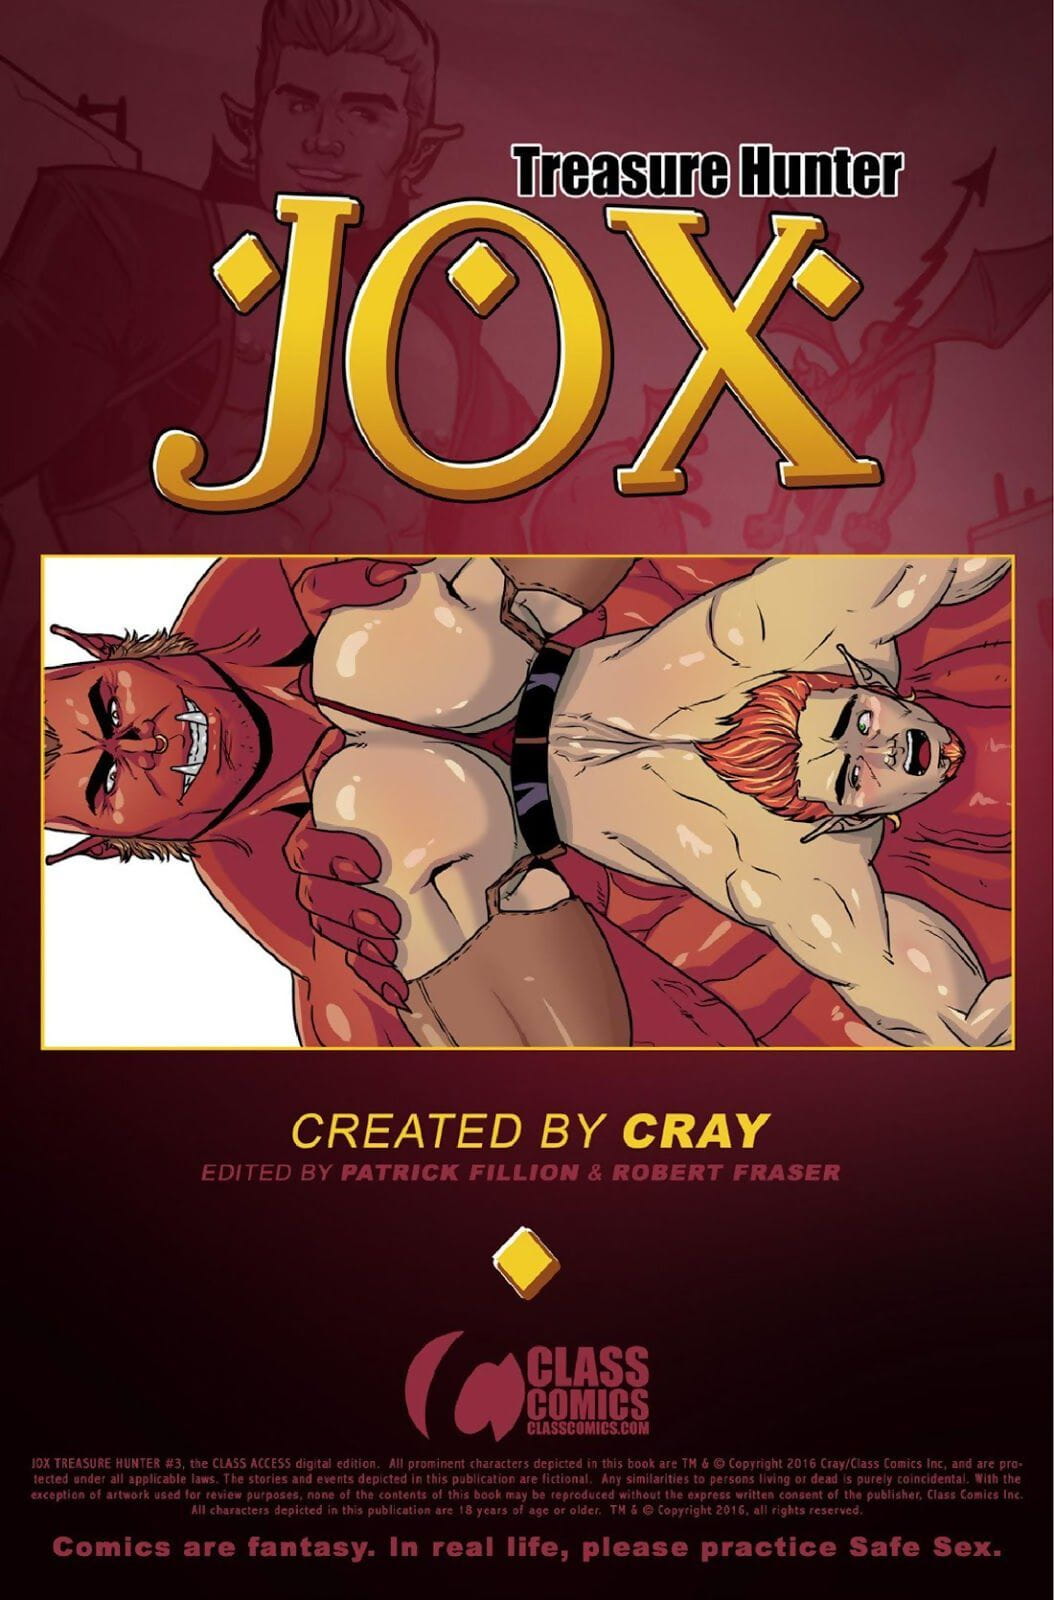 Tom cray jox – Hazine avcı #3 page 1